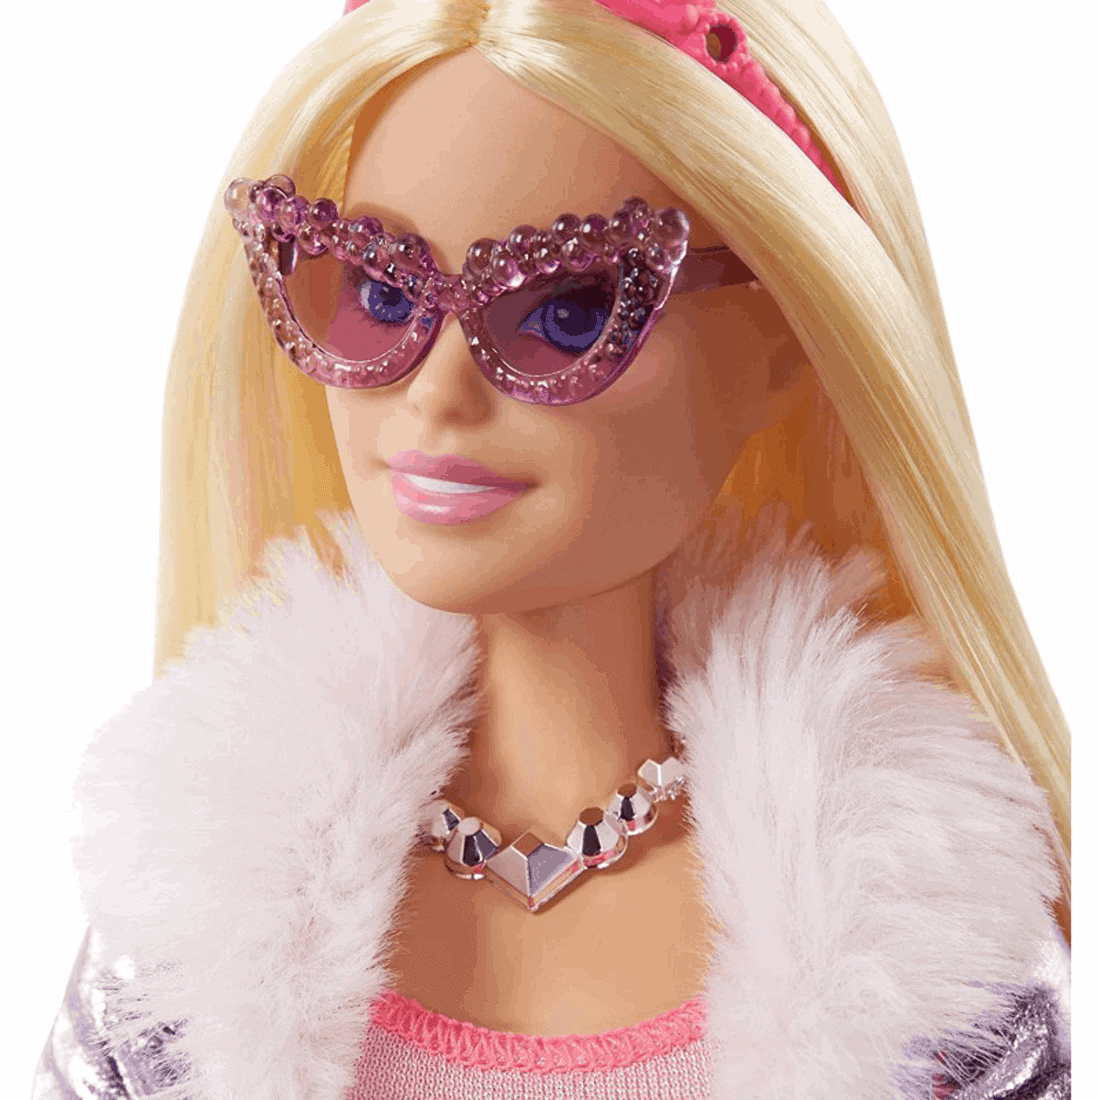 Barbie - Μοντέρνα Πριγκίπισσα